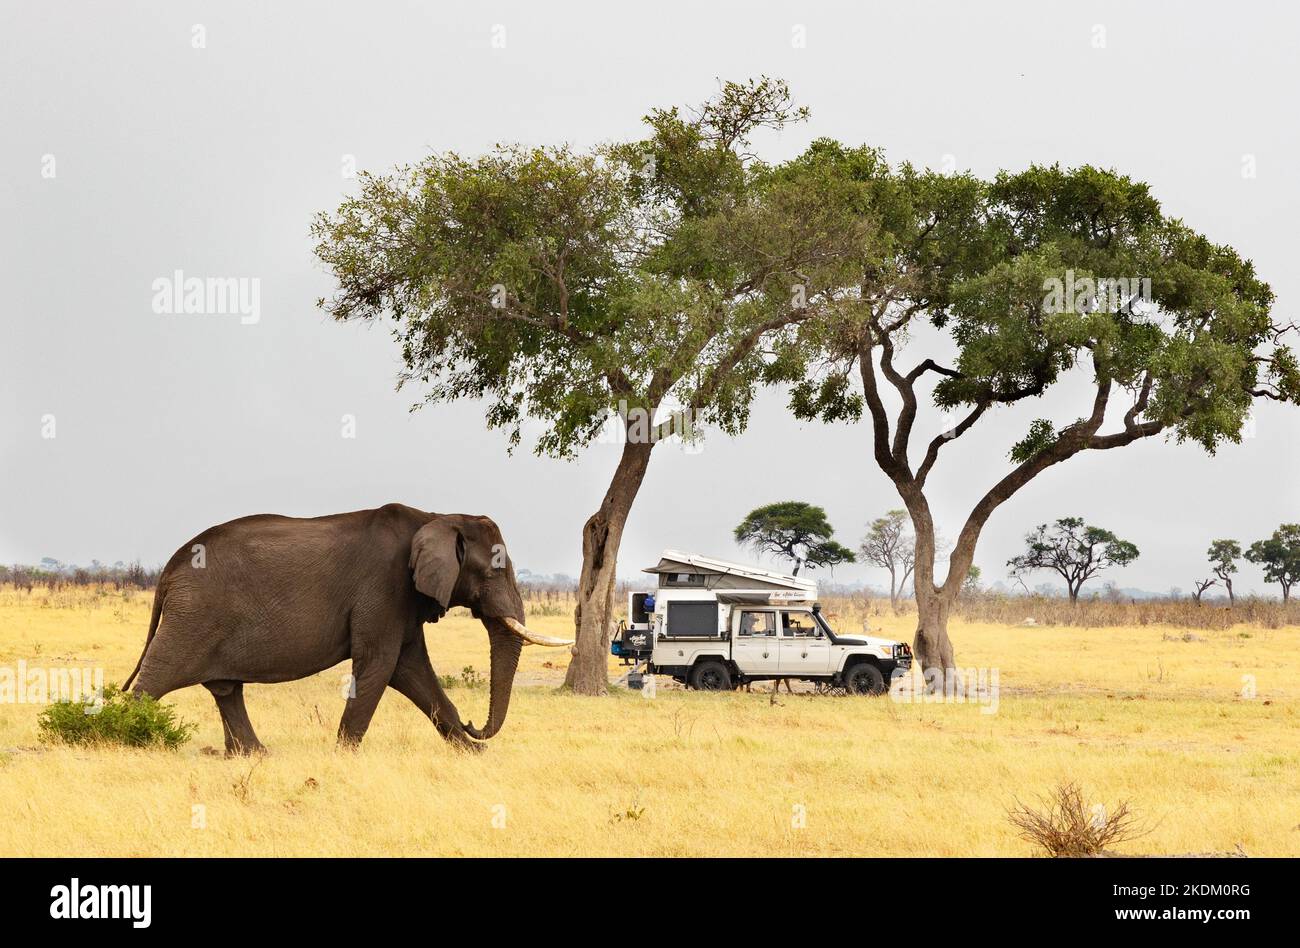 Afrikanische Safari - ein Elefant nähert sich Menschen auf einer Jeep-Safari-Urlaub, Moremi Game Reserve, Okavango Delta, Botswana Afrika. Afrika Reisen. Stockfoto